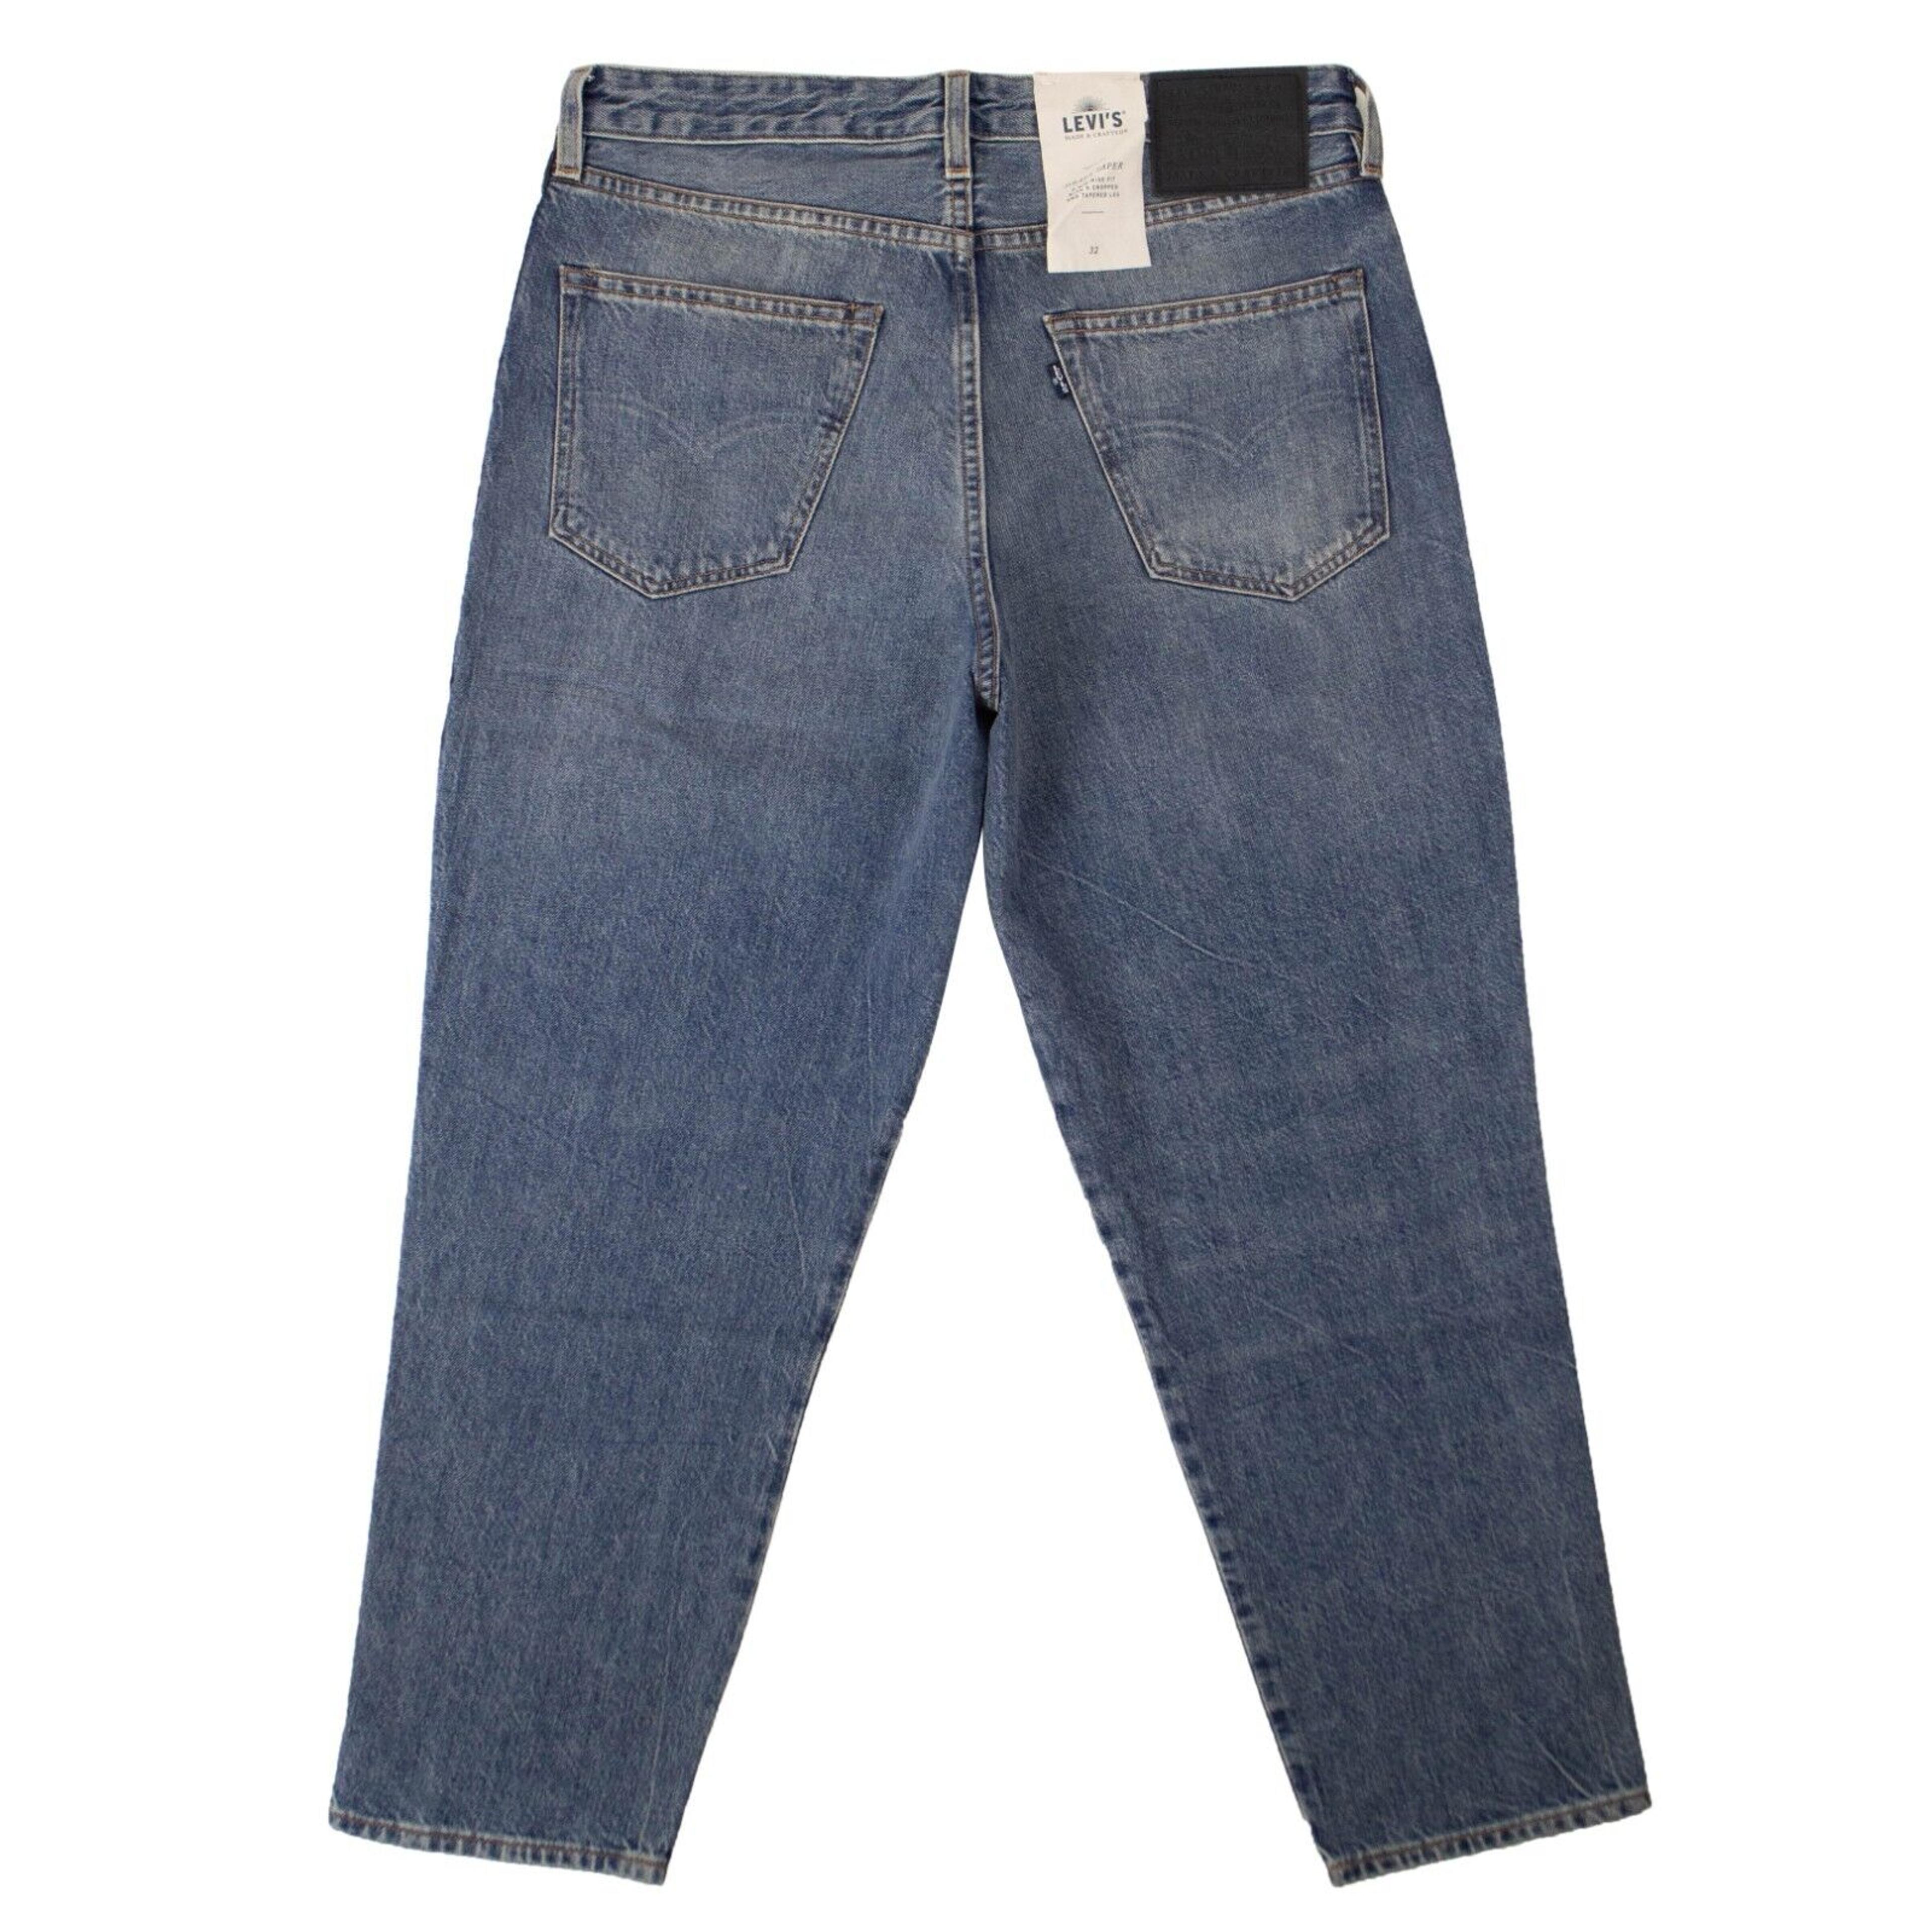 Alternate View 2 of Blue Draft Taper Side Stripe Jeans